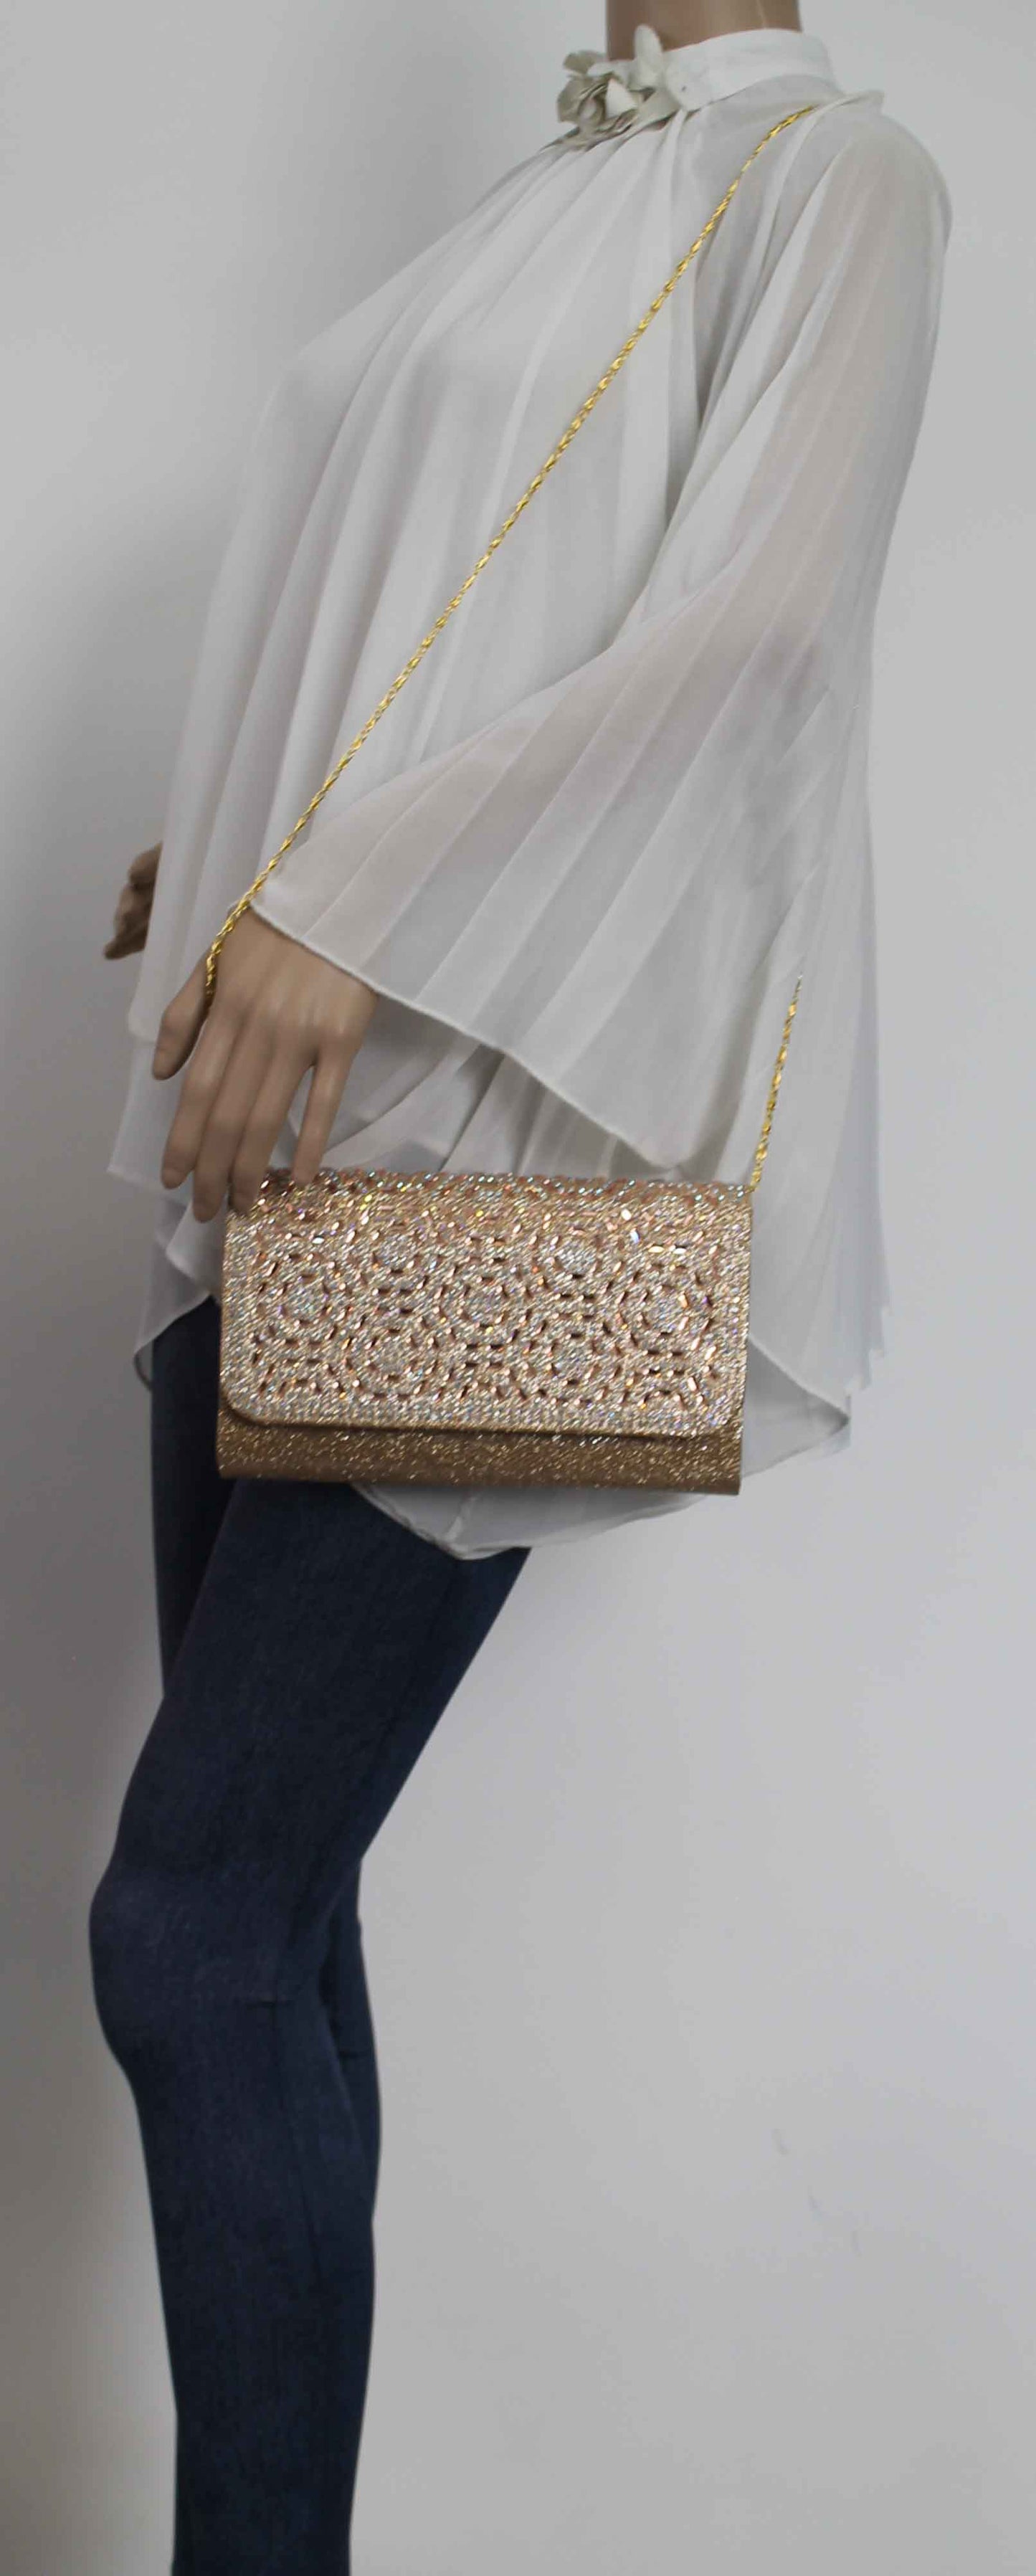 SWANKYSWANS Sophie Diamante Clutch Bag Gold Cute Cheap Clutch Bag For Weddings School and Work